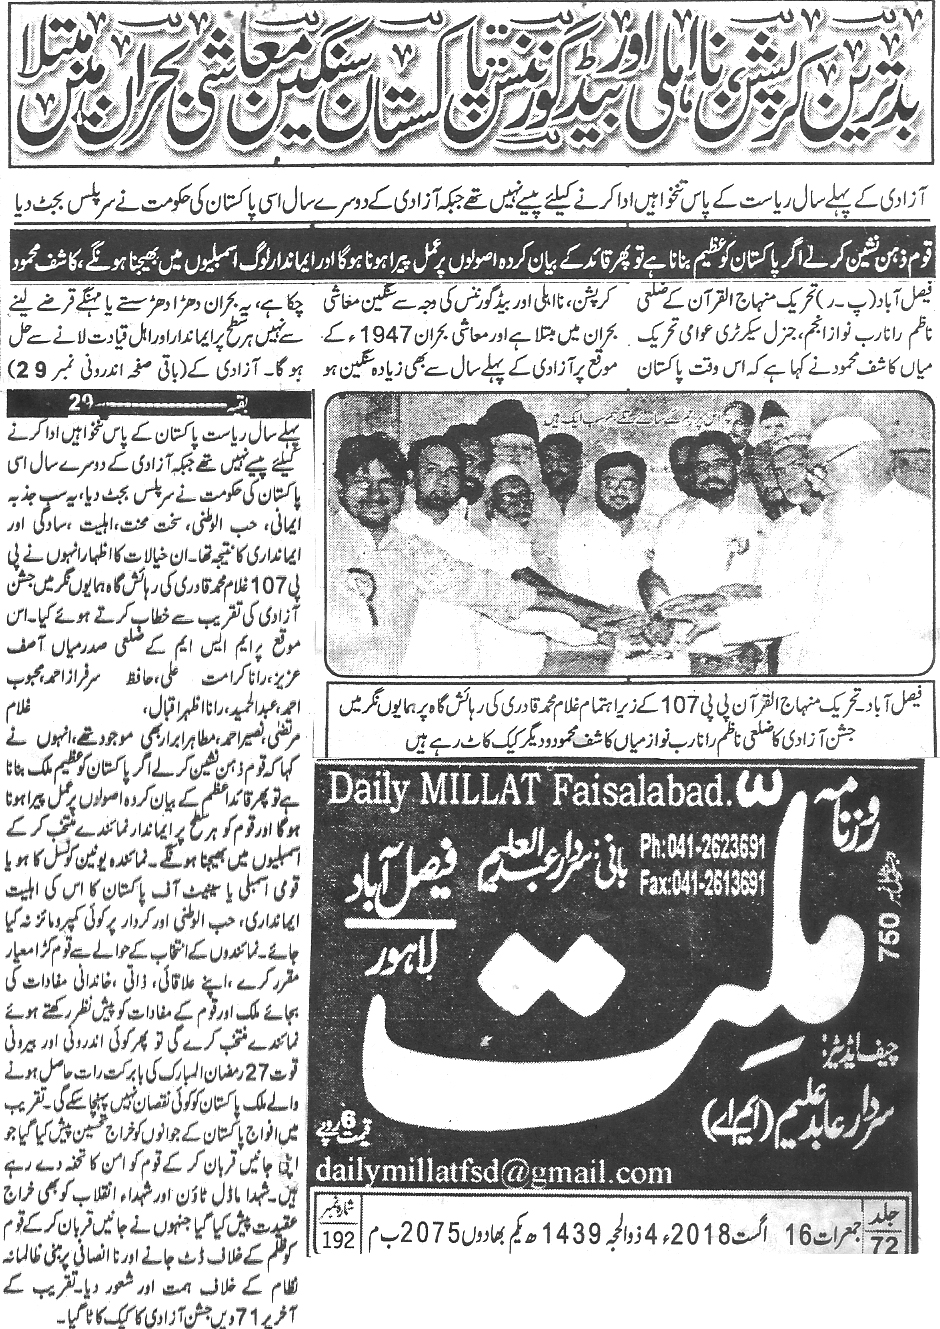 Minhaj-ul-Quran  Print Media Coverage Daily Millat Back page 4 